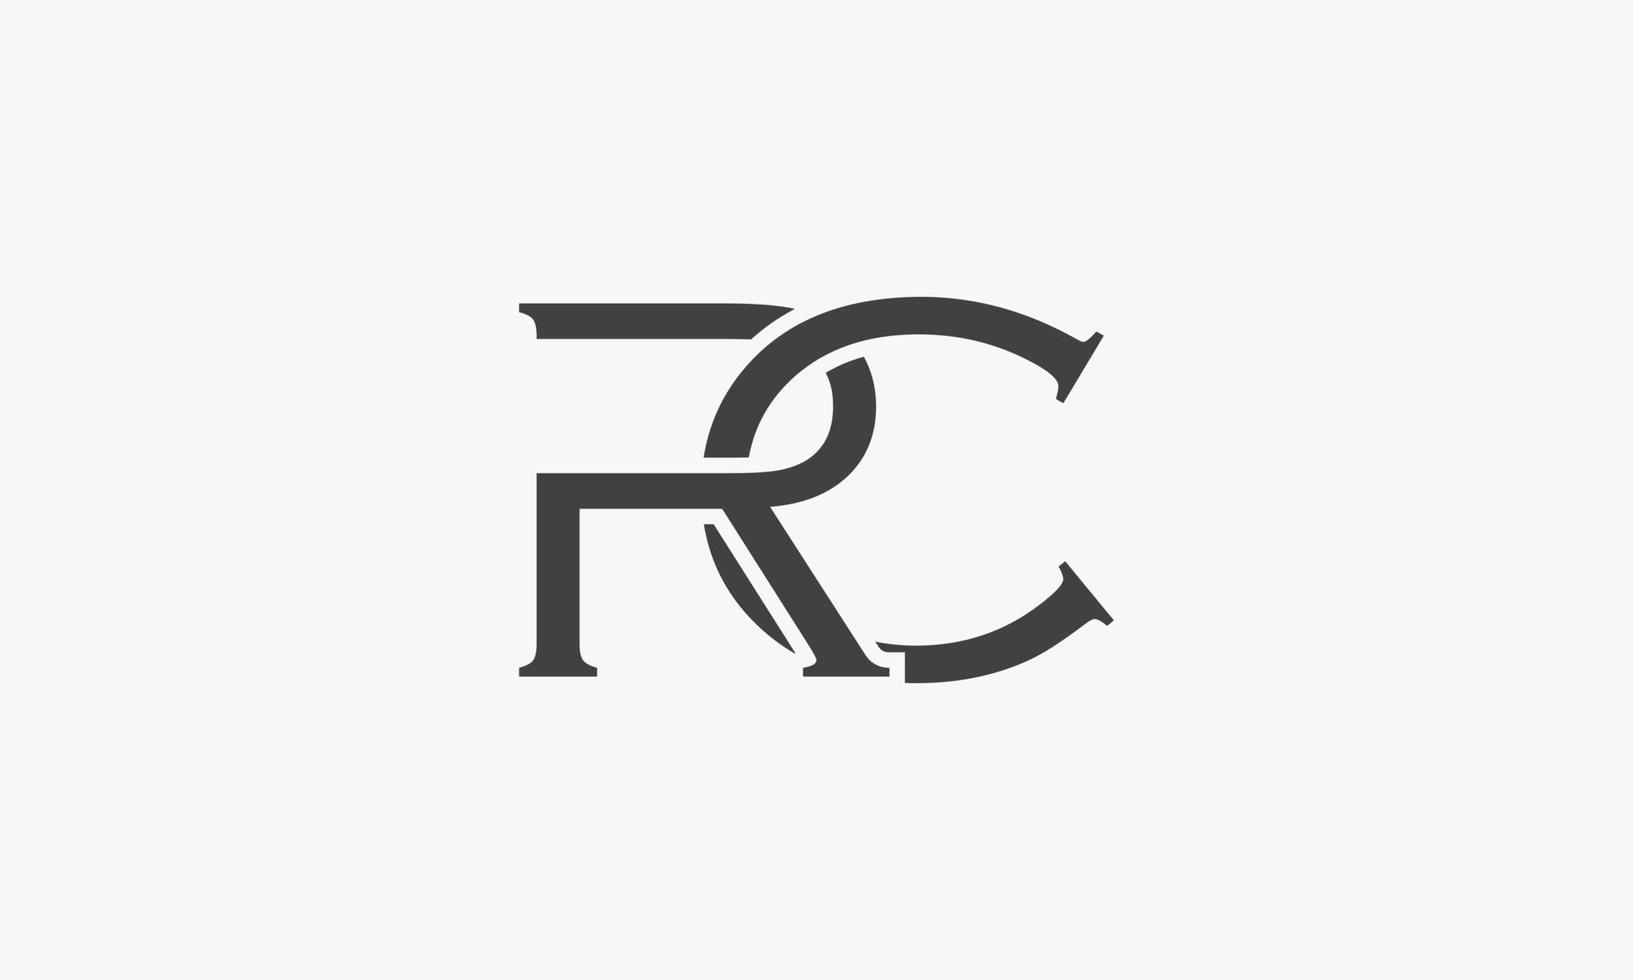 klassisk bokstav rc logotyp isolerad på vit bakgrund. vektor